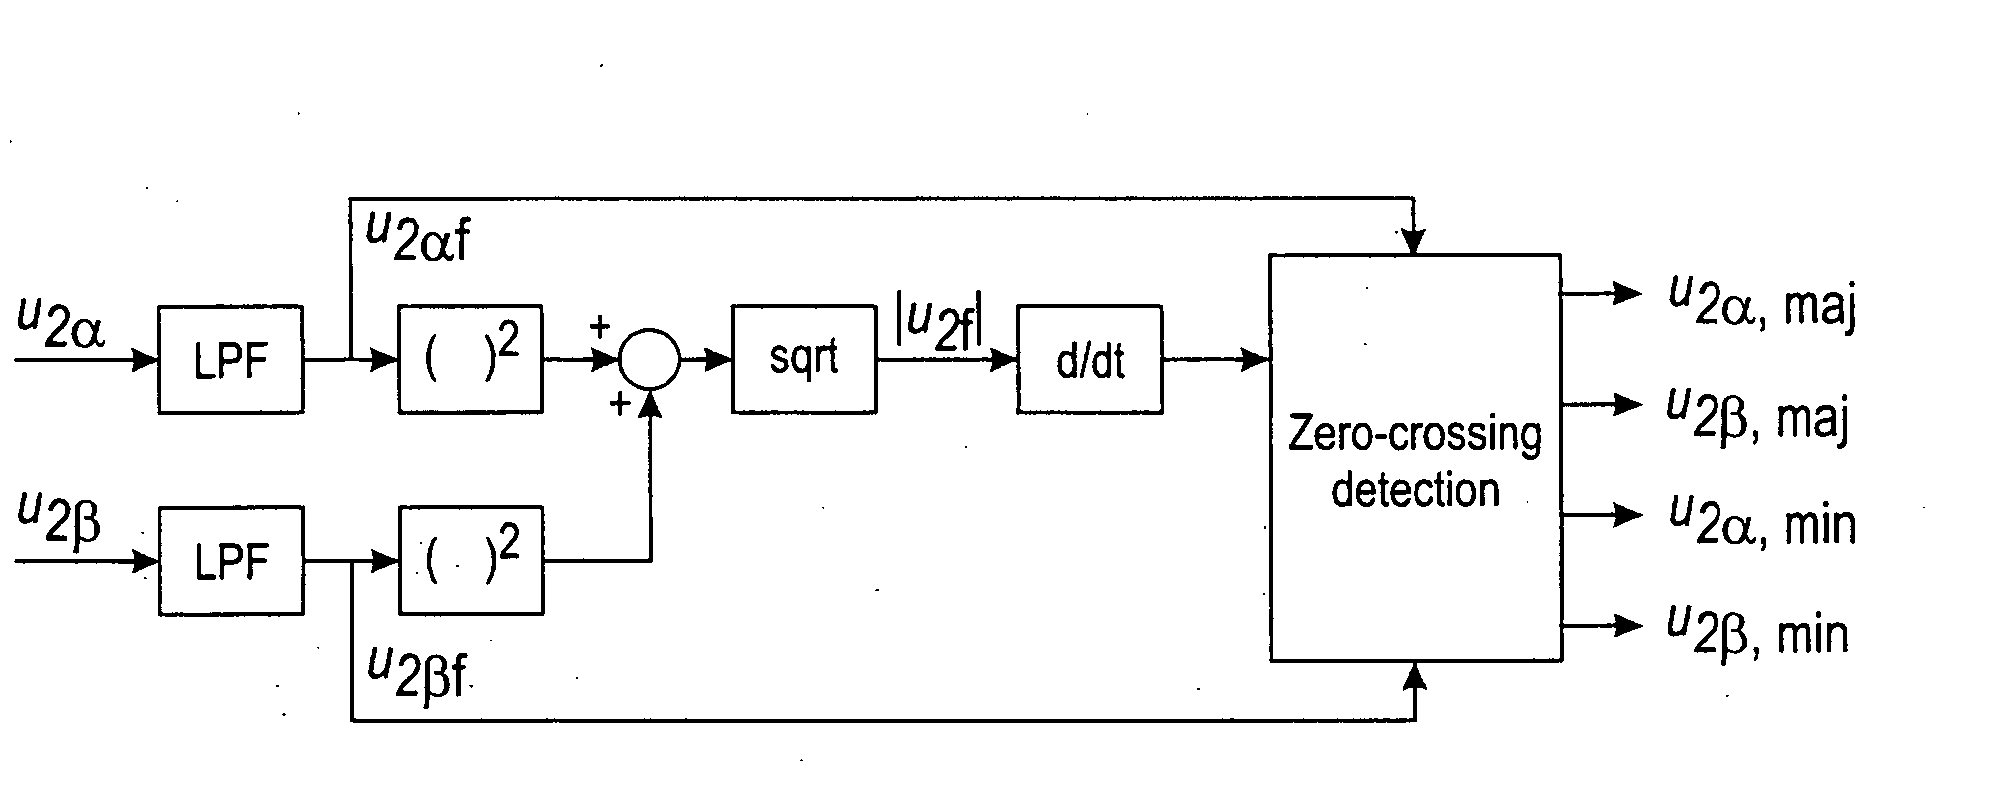 Compensation method for a voltage unbalance